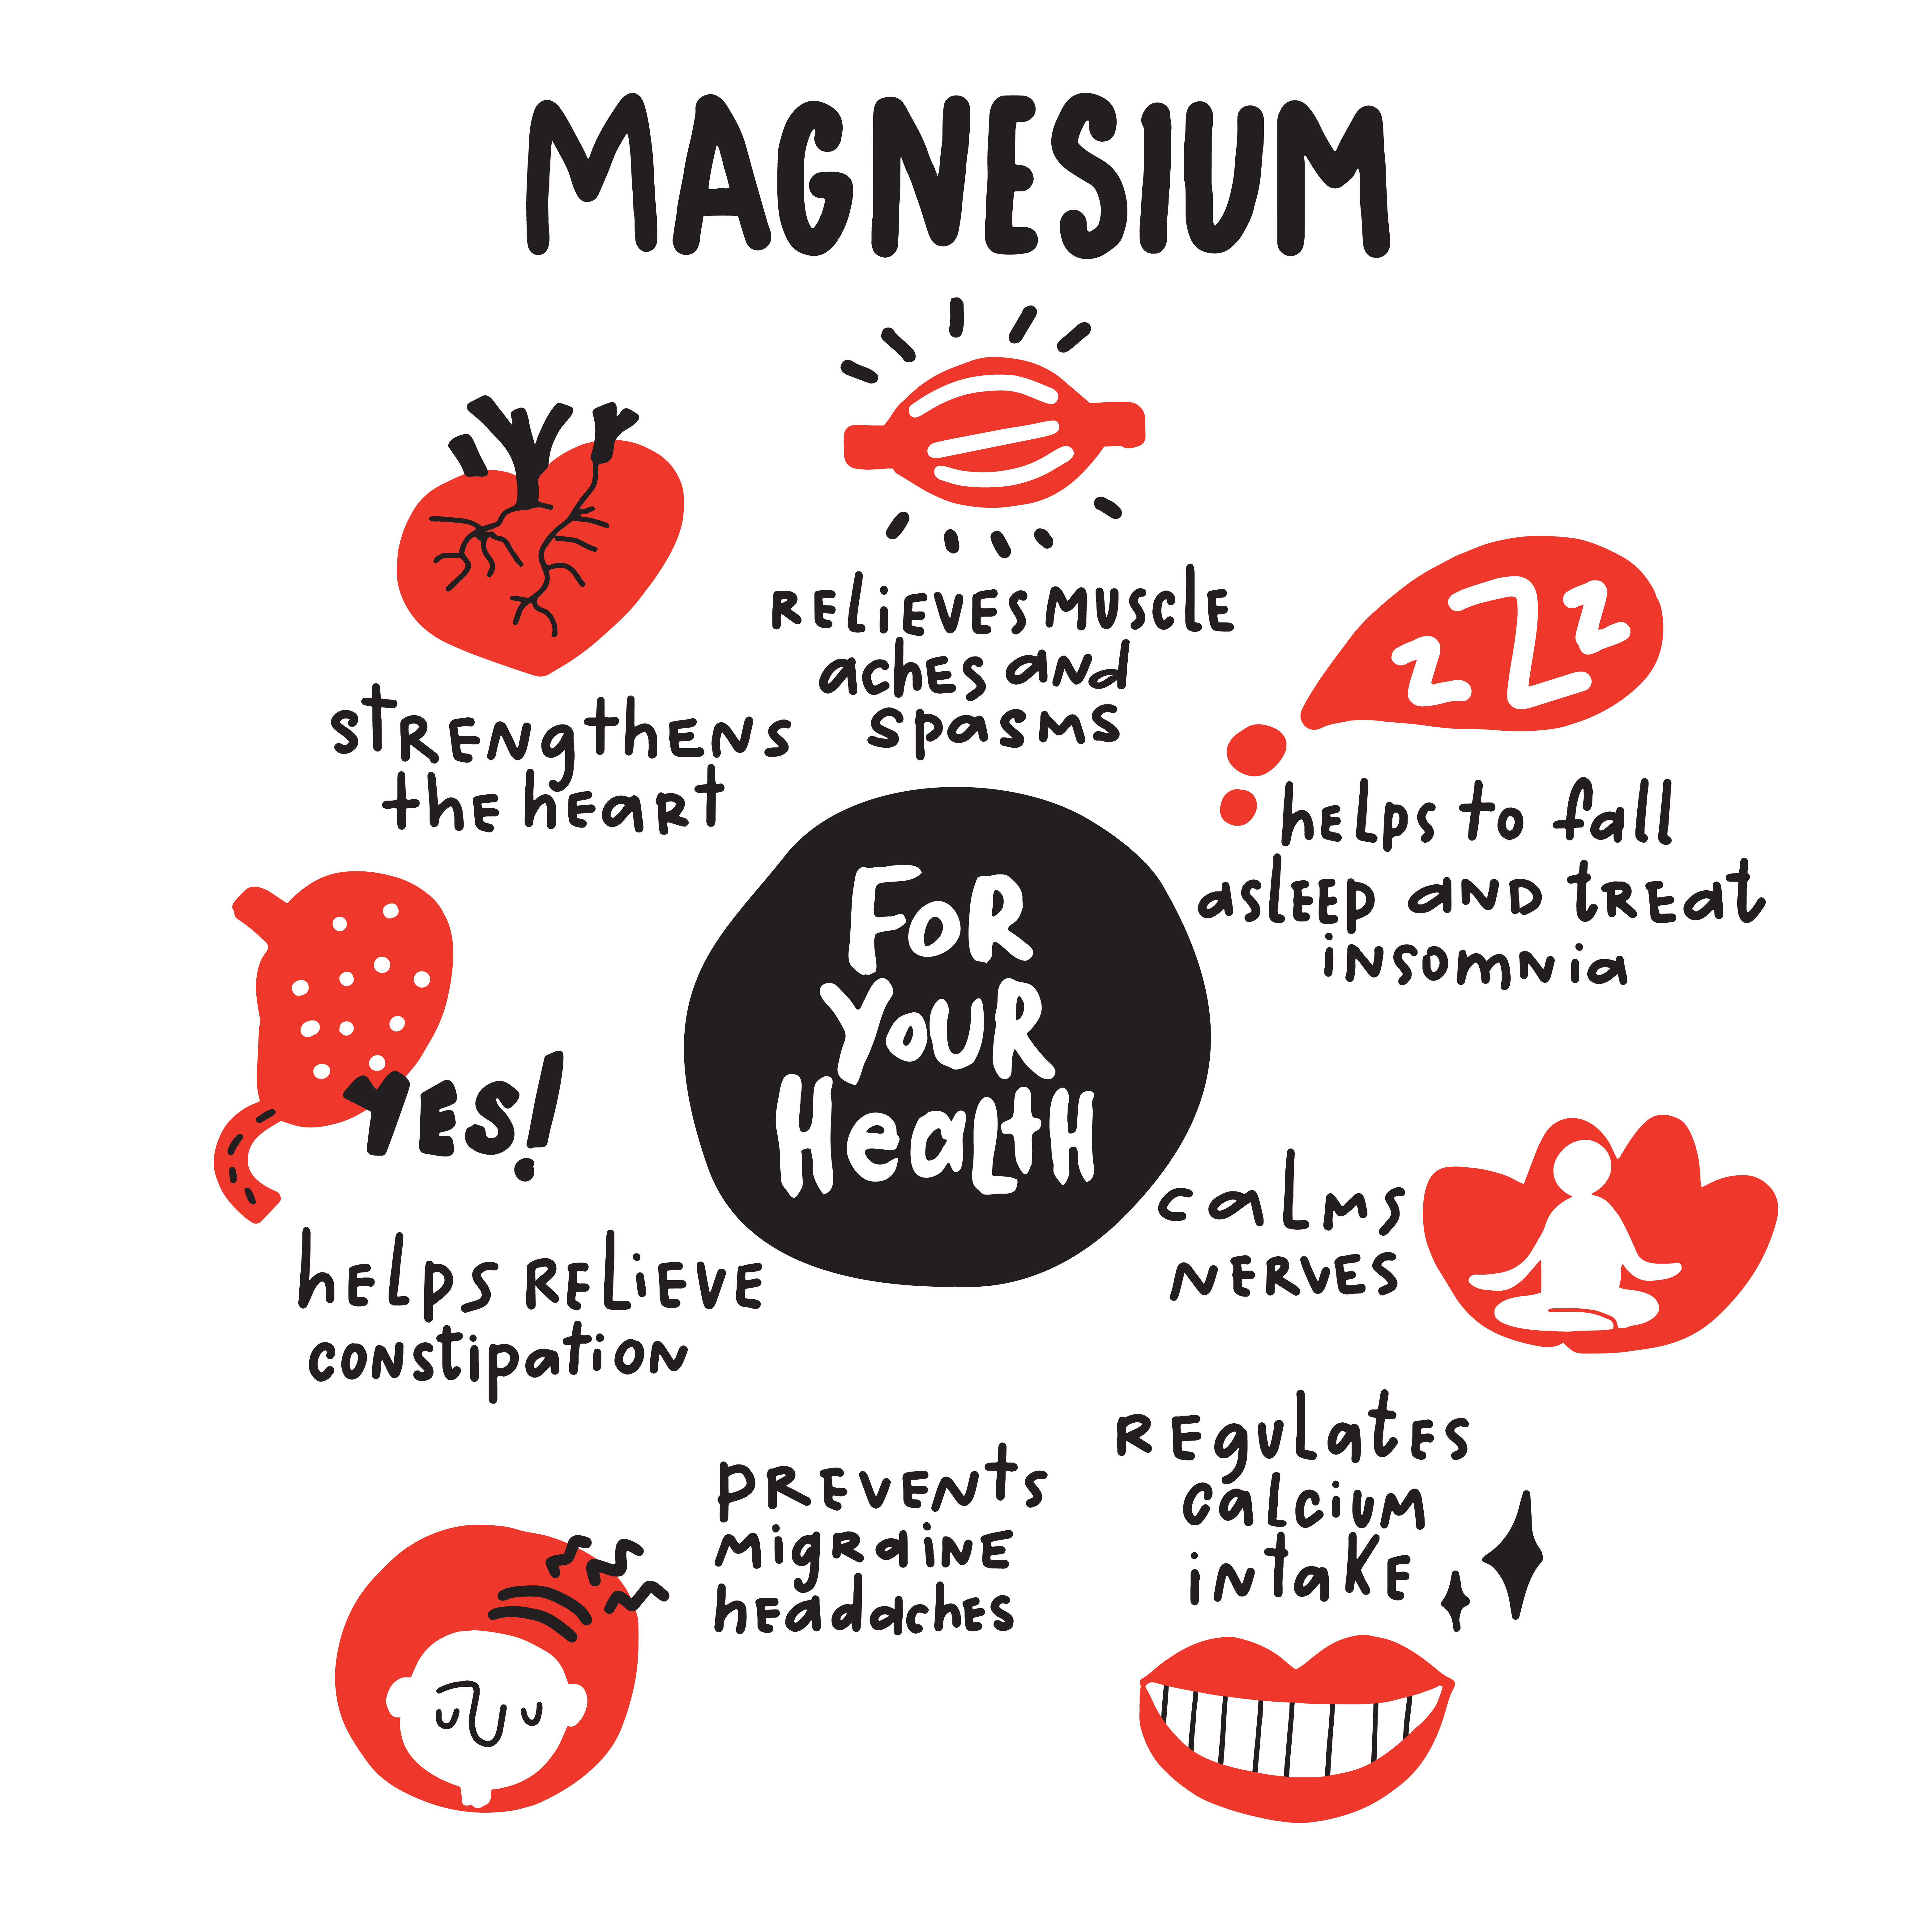 Most important magnesium benefits